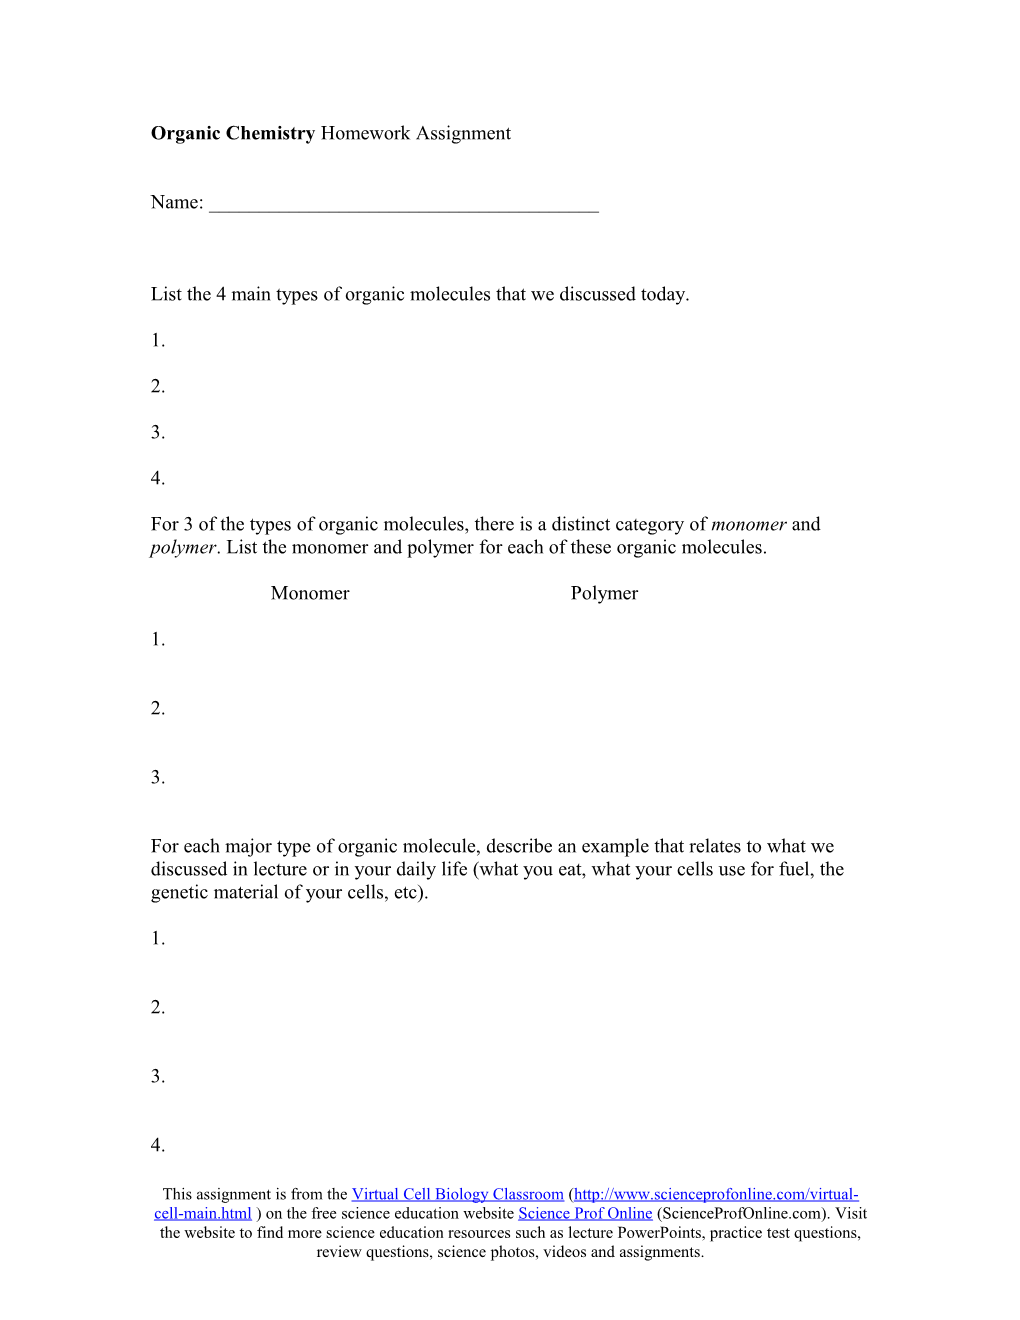 Organic Chemistry Essay Question Homework Assignment